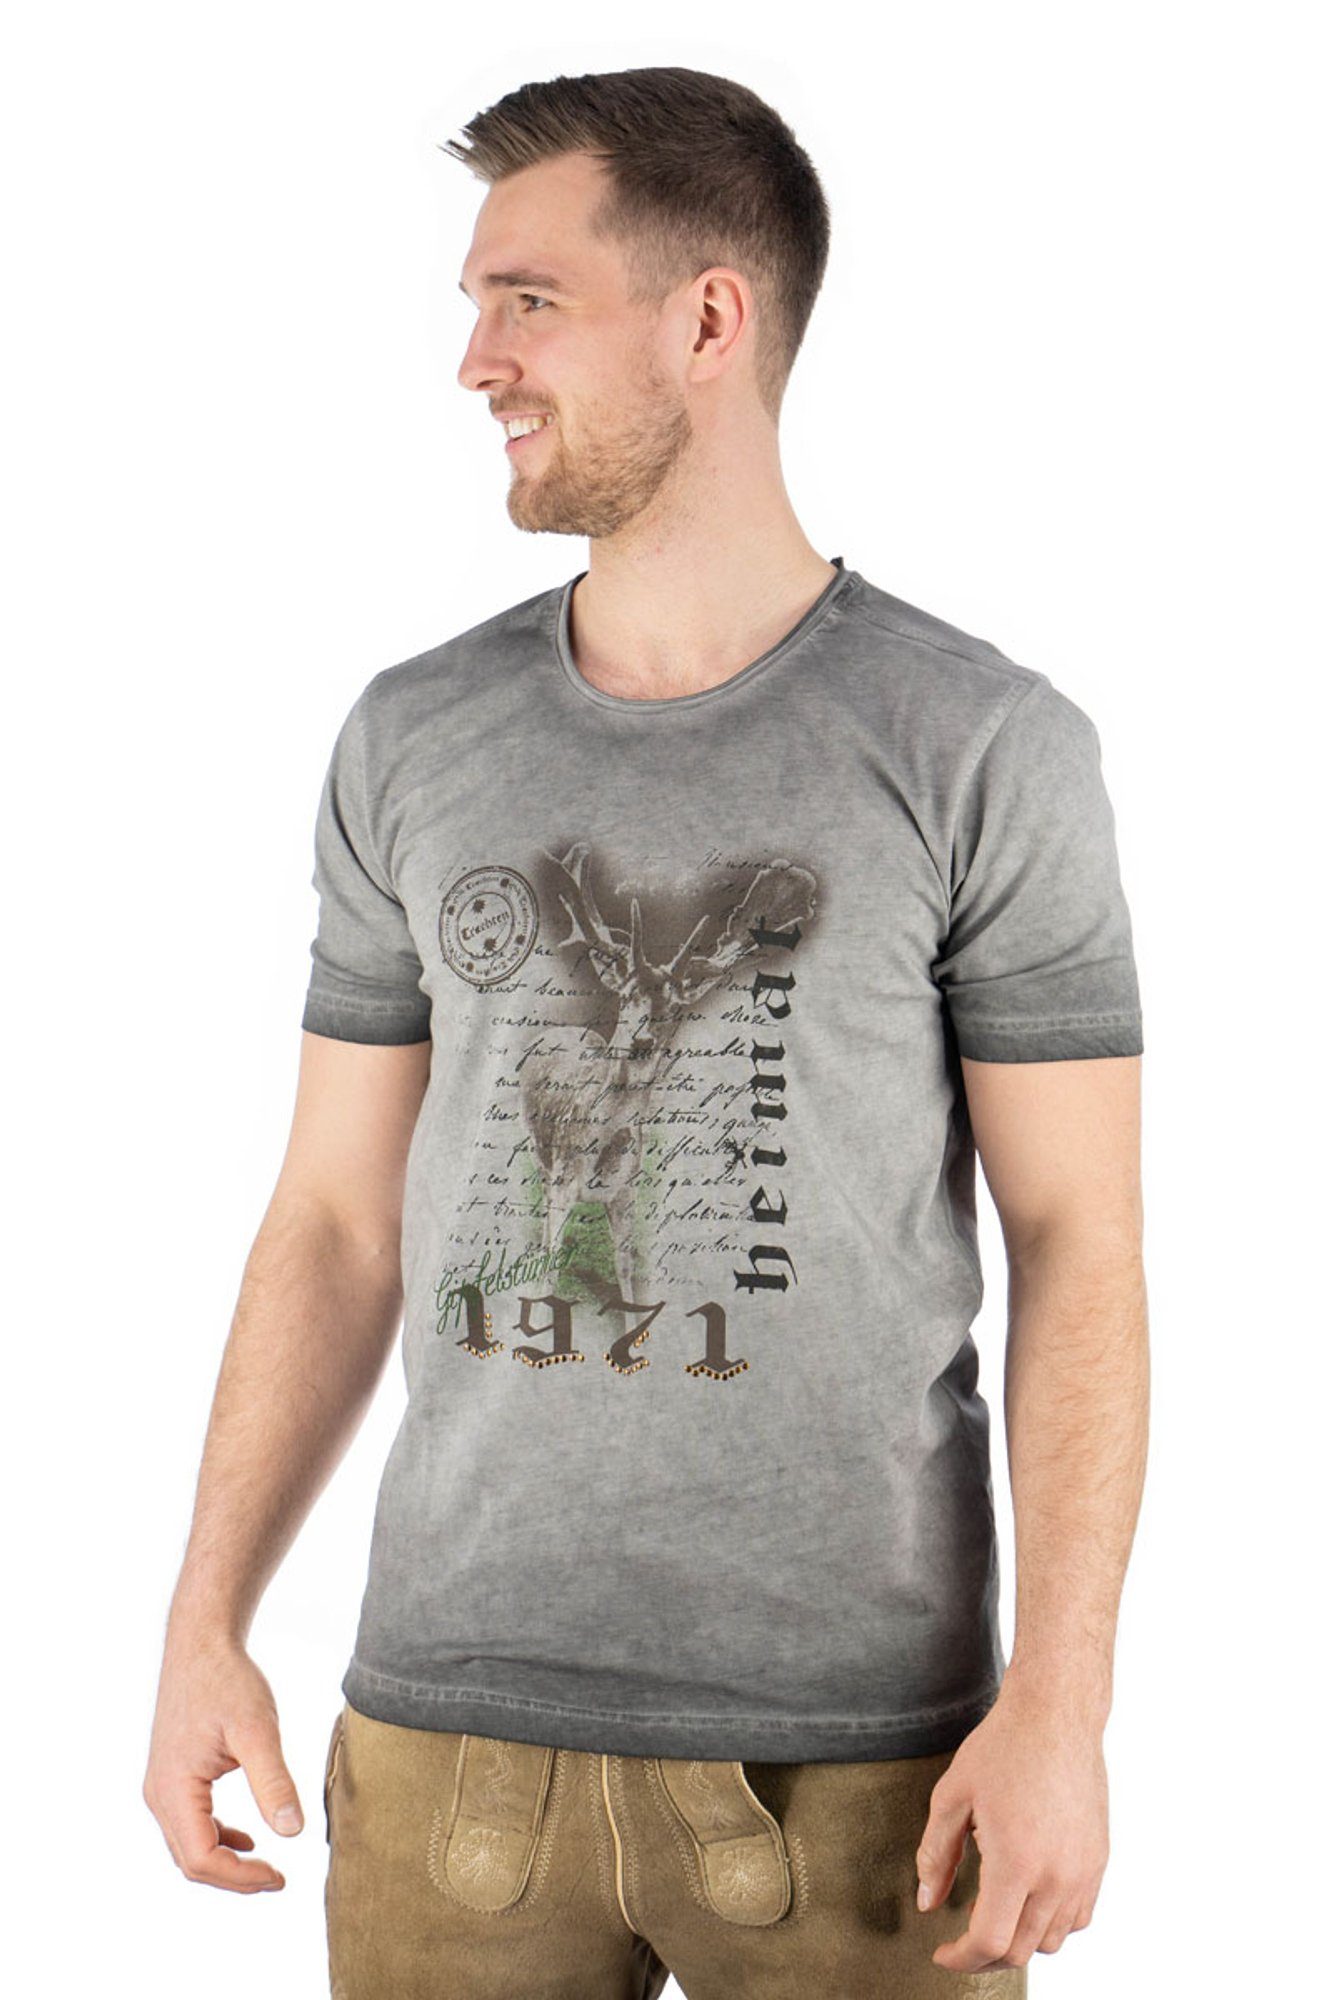 Trachtenshirt T-Shirt Kurzarm Ofapuo anthrazit OS-Trachten mit Motivdruck